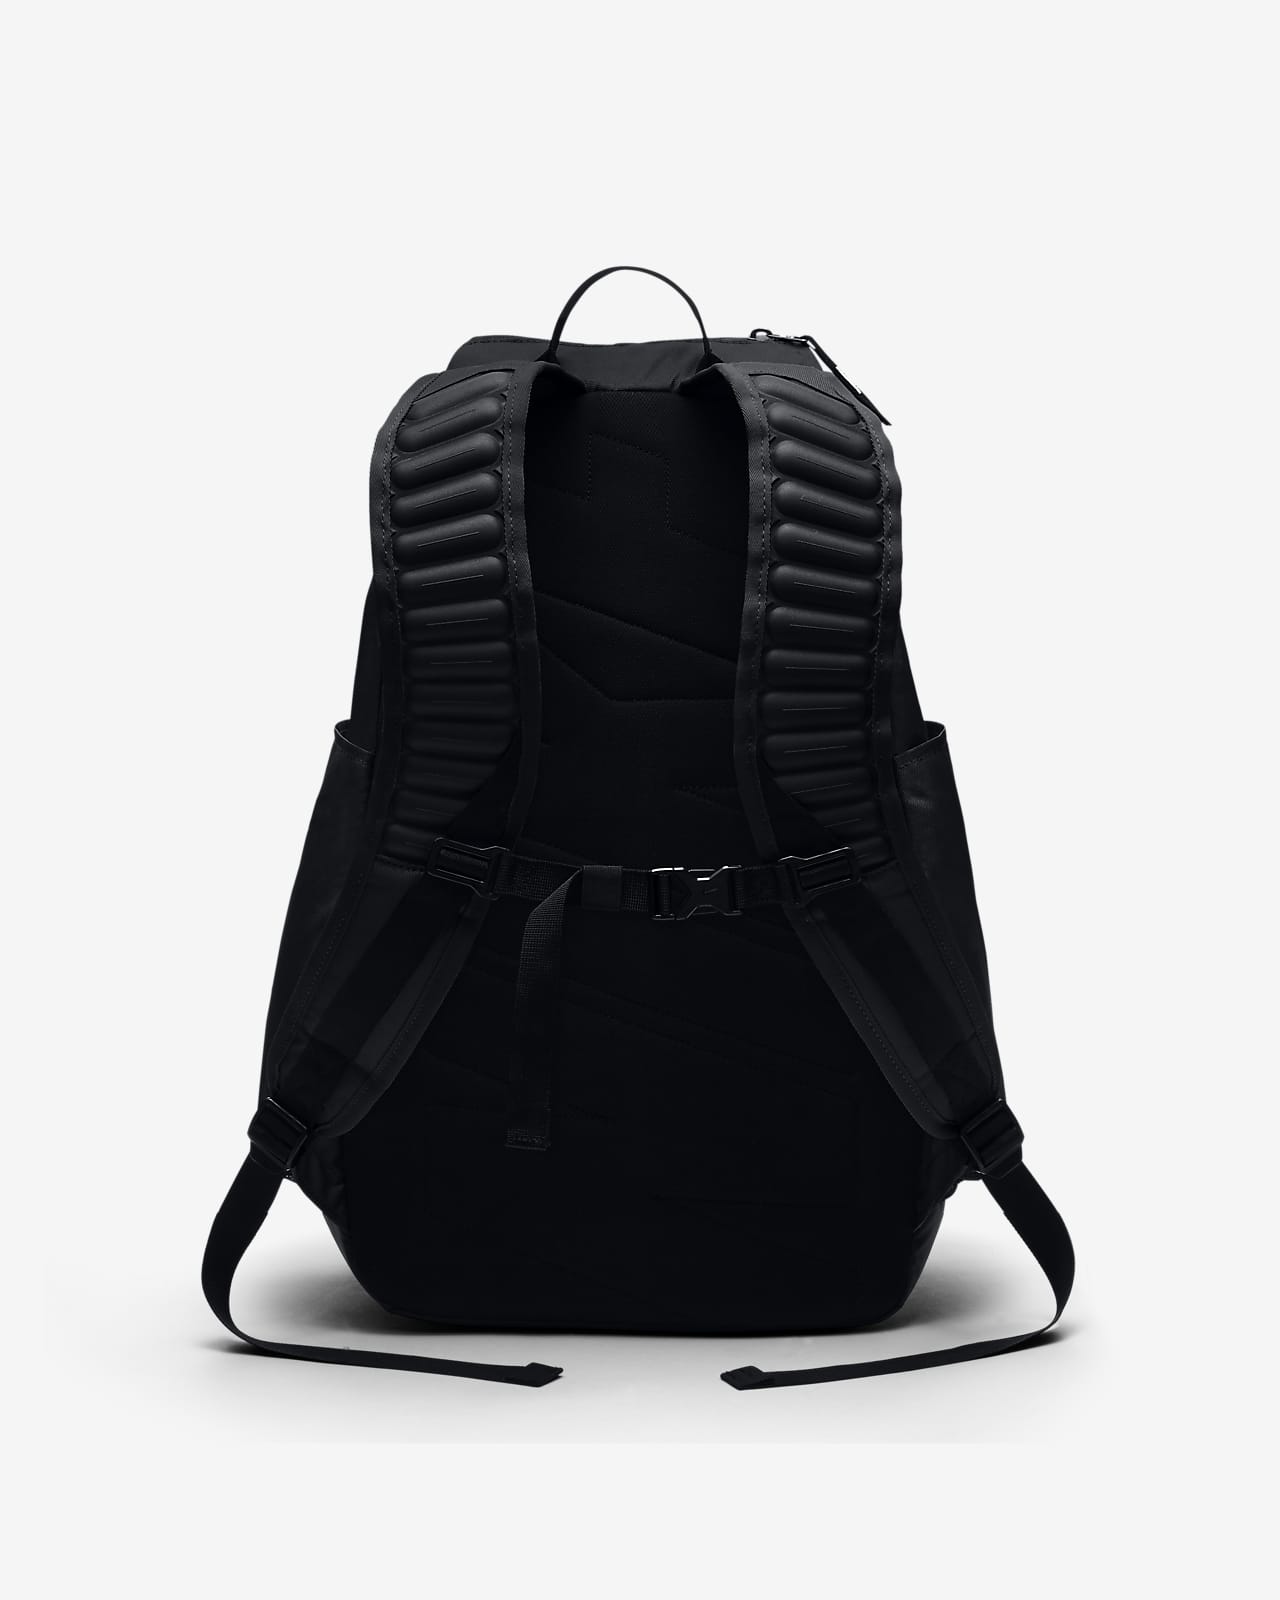 max air backpack